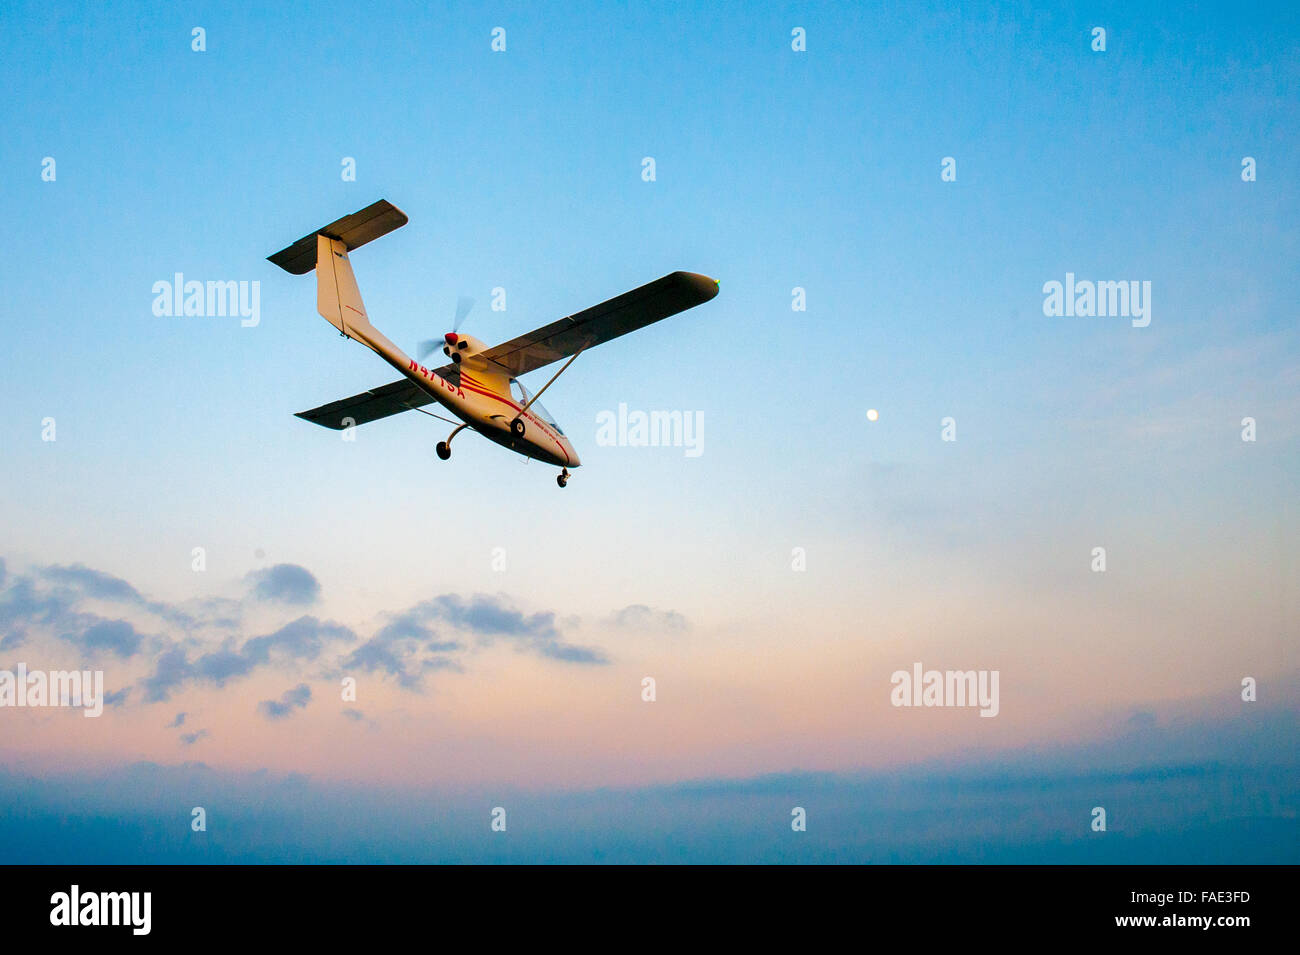 Small plane taking a flight at dusk Stock Photo